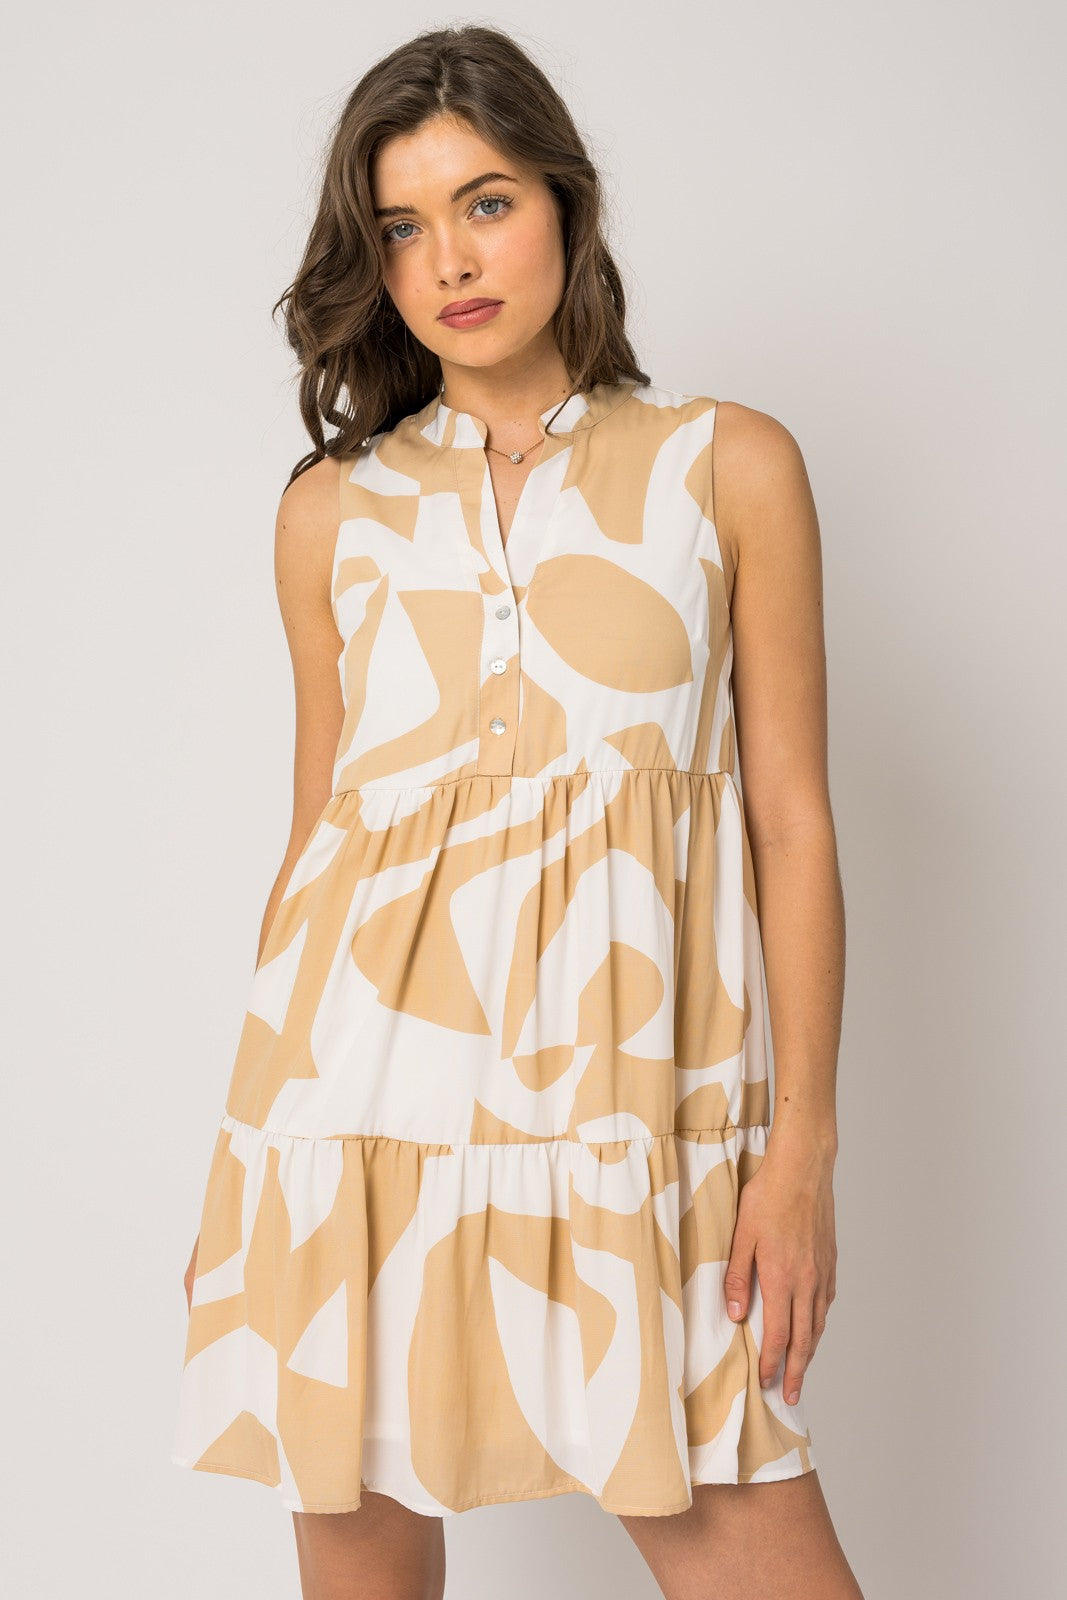 Taupe & White Print Dress